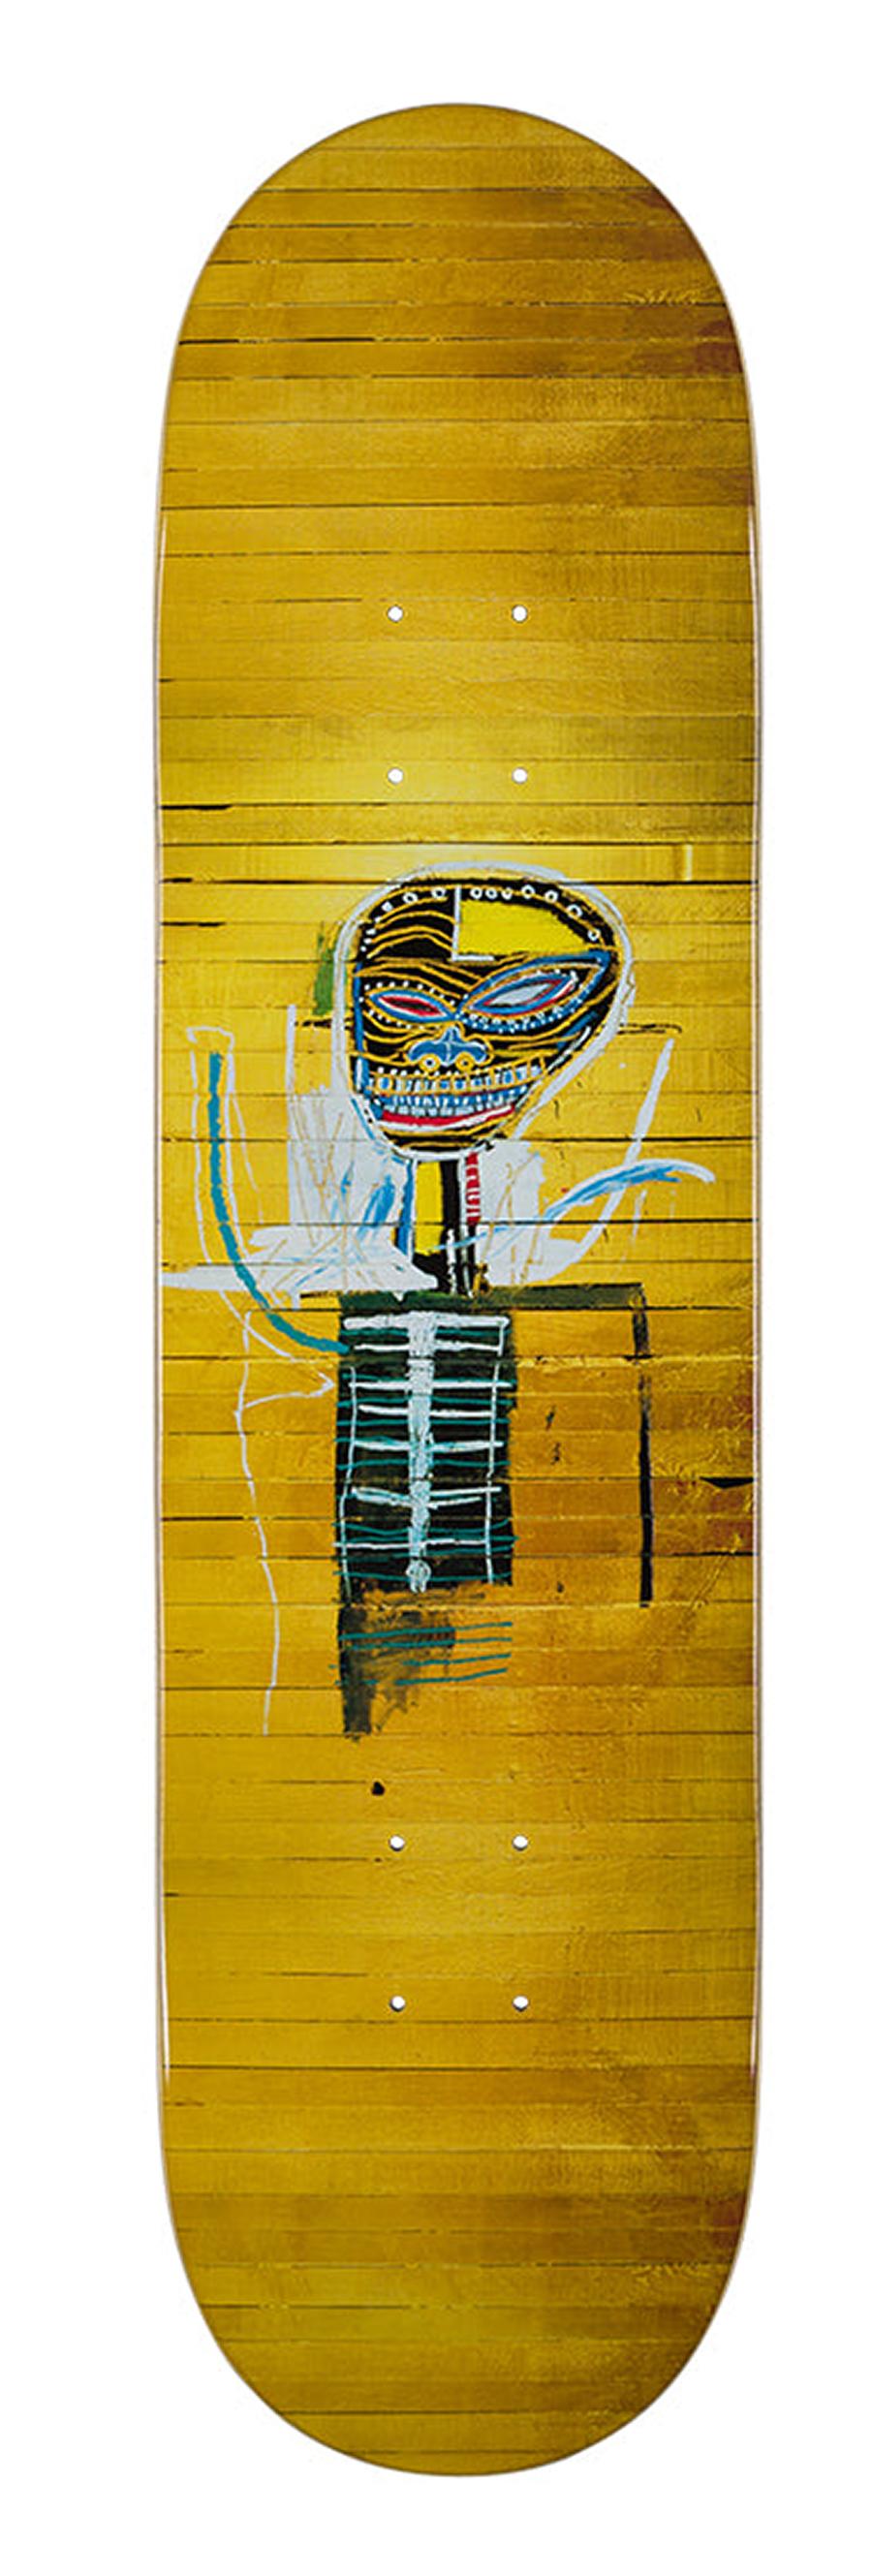 after Jean-Michel Basquiat Abstract Print - Basquiat Gold Griot Skateboard Deck (Basquiat skate)